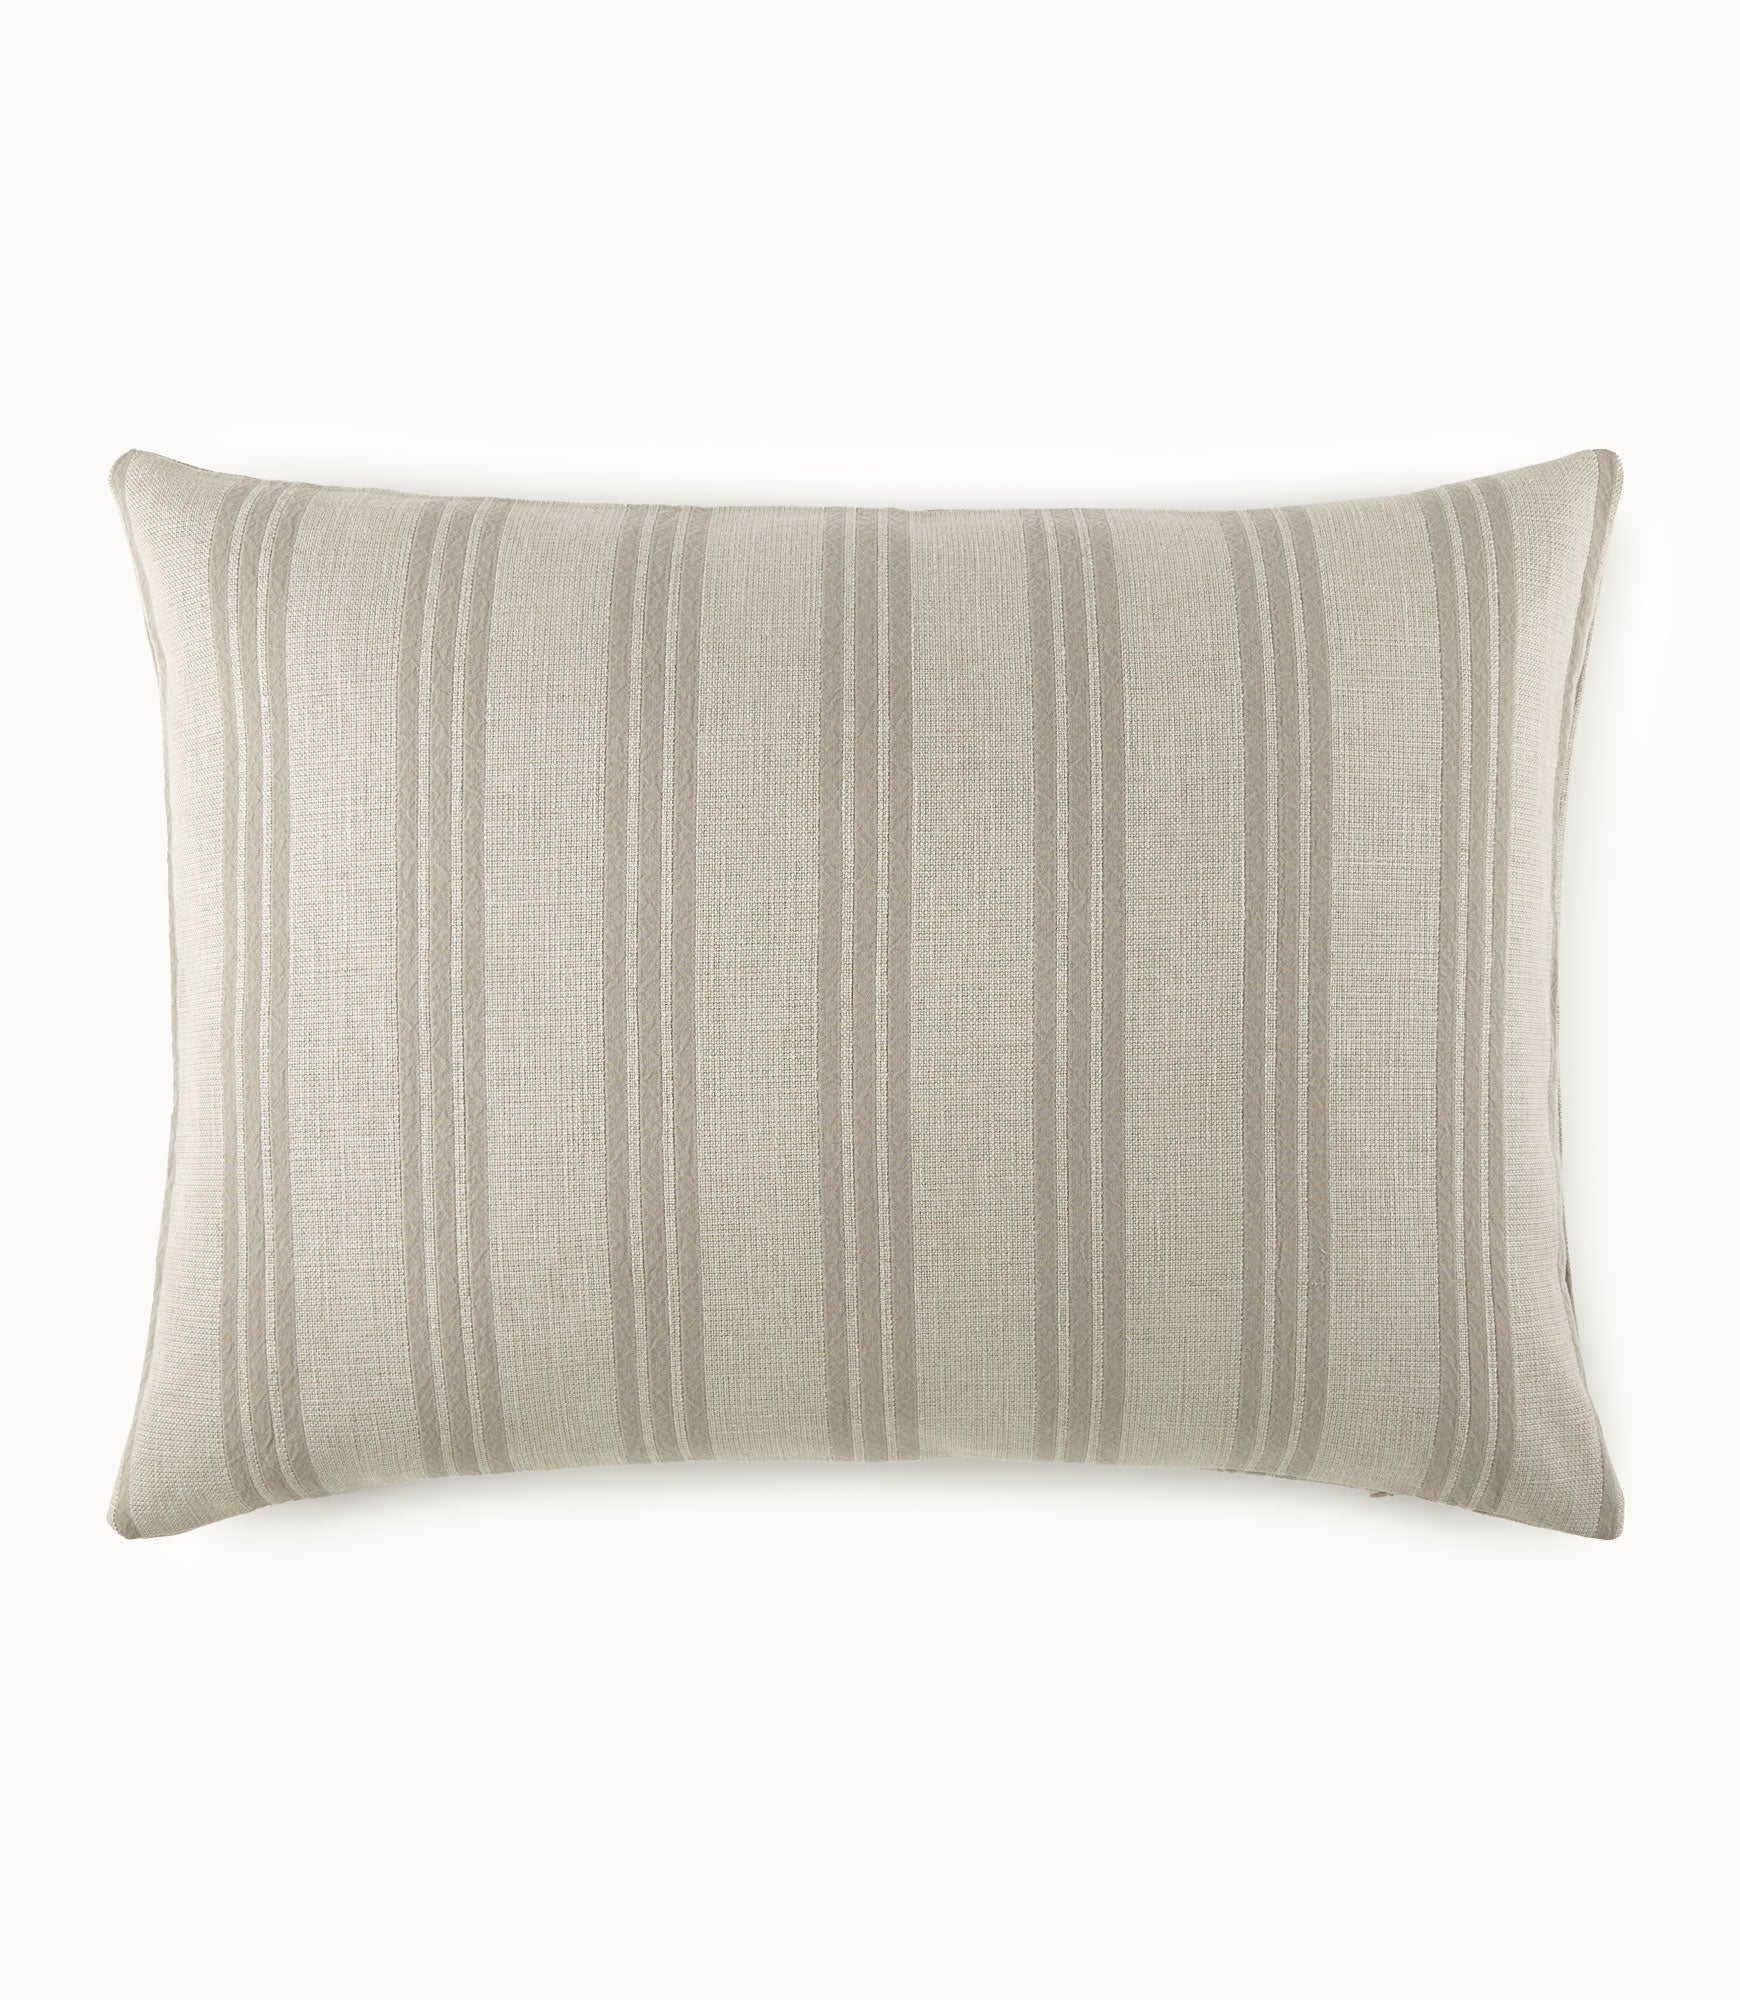 Lennox Striped Grand Euro Decorative Pillow, Pebble